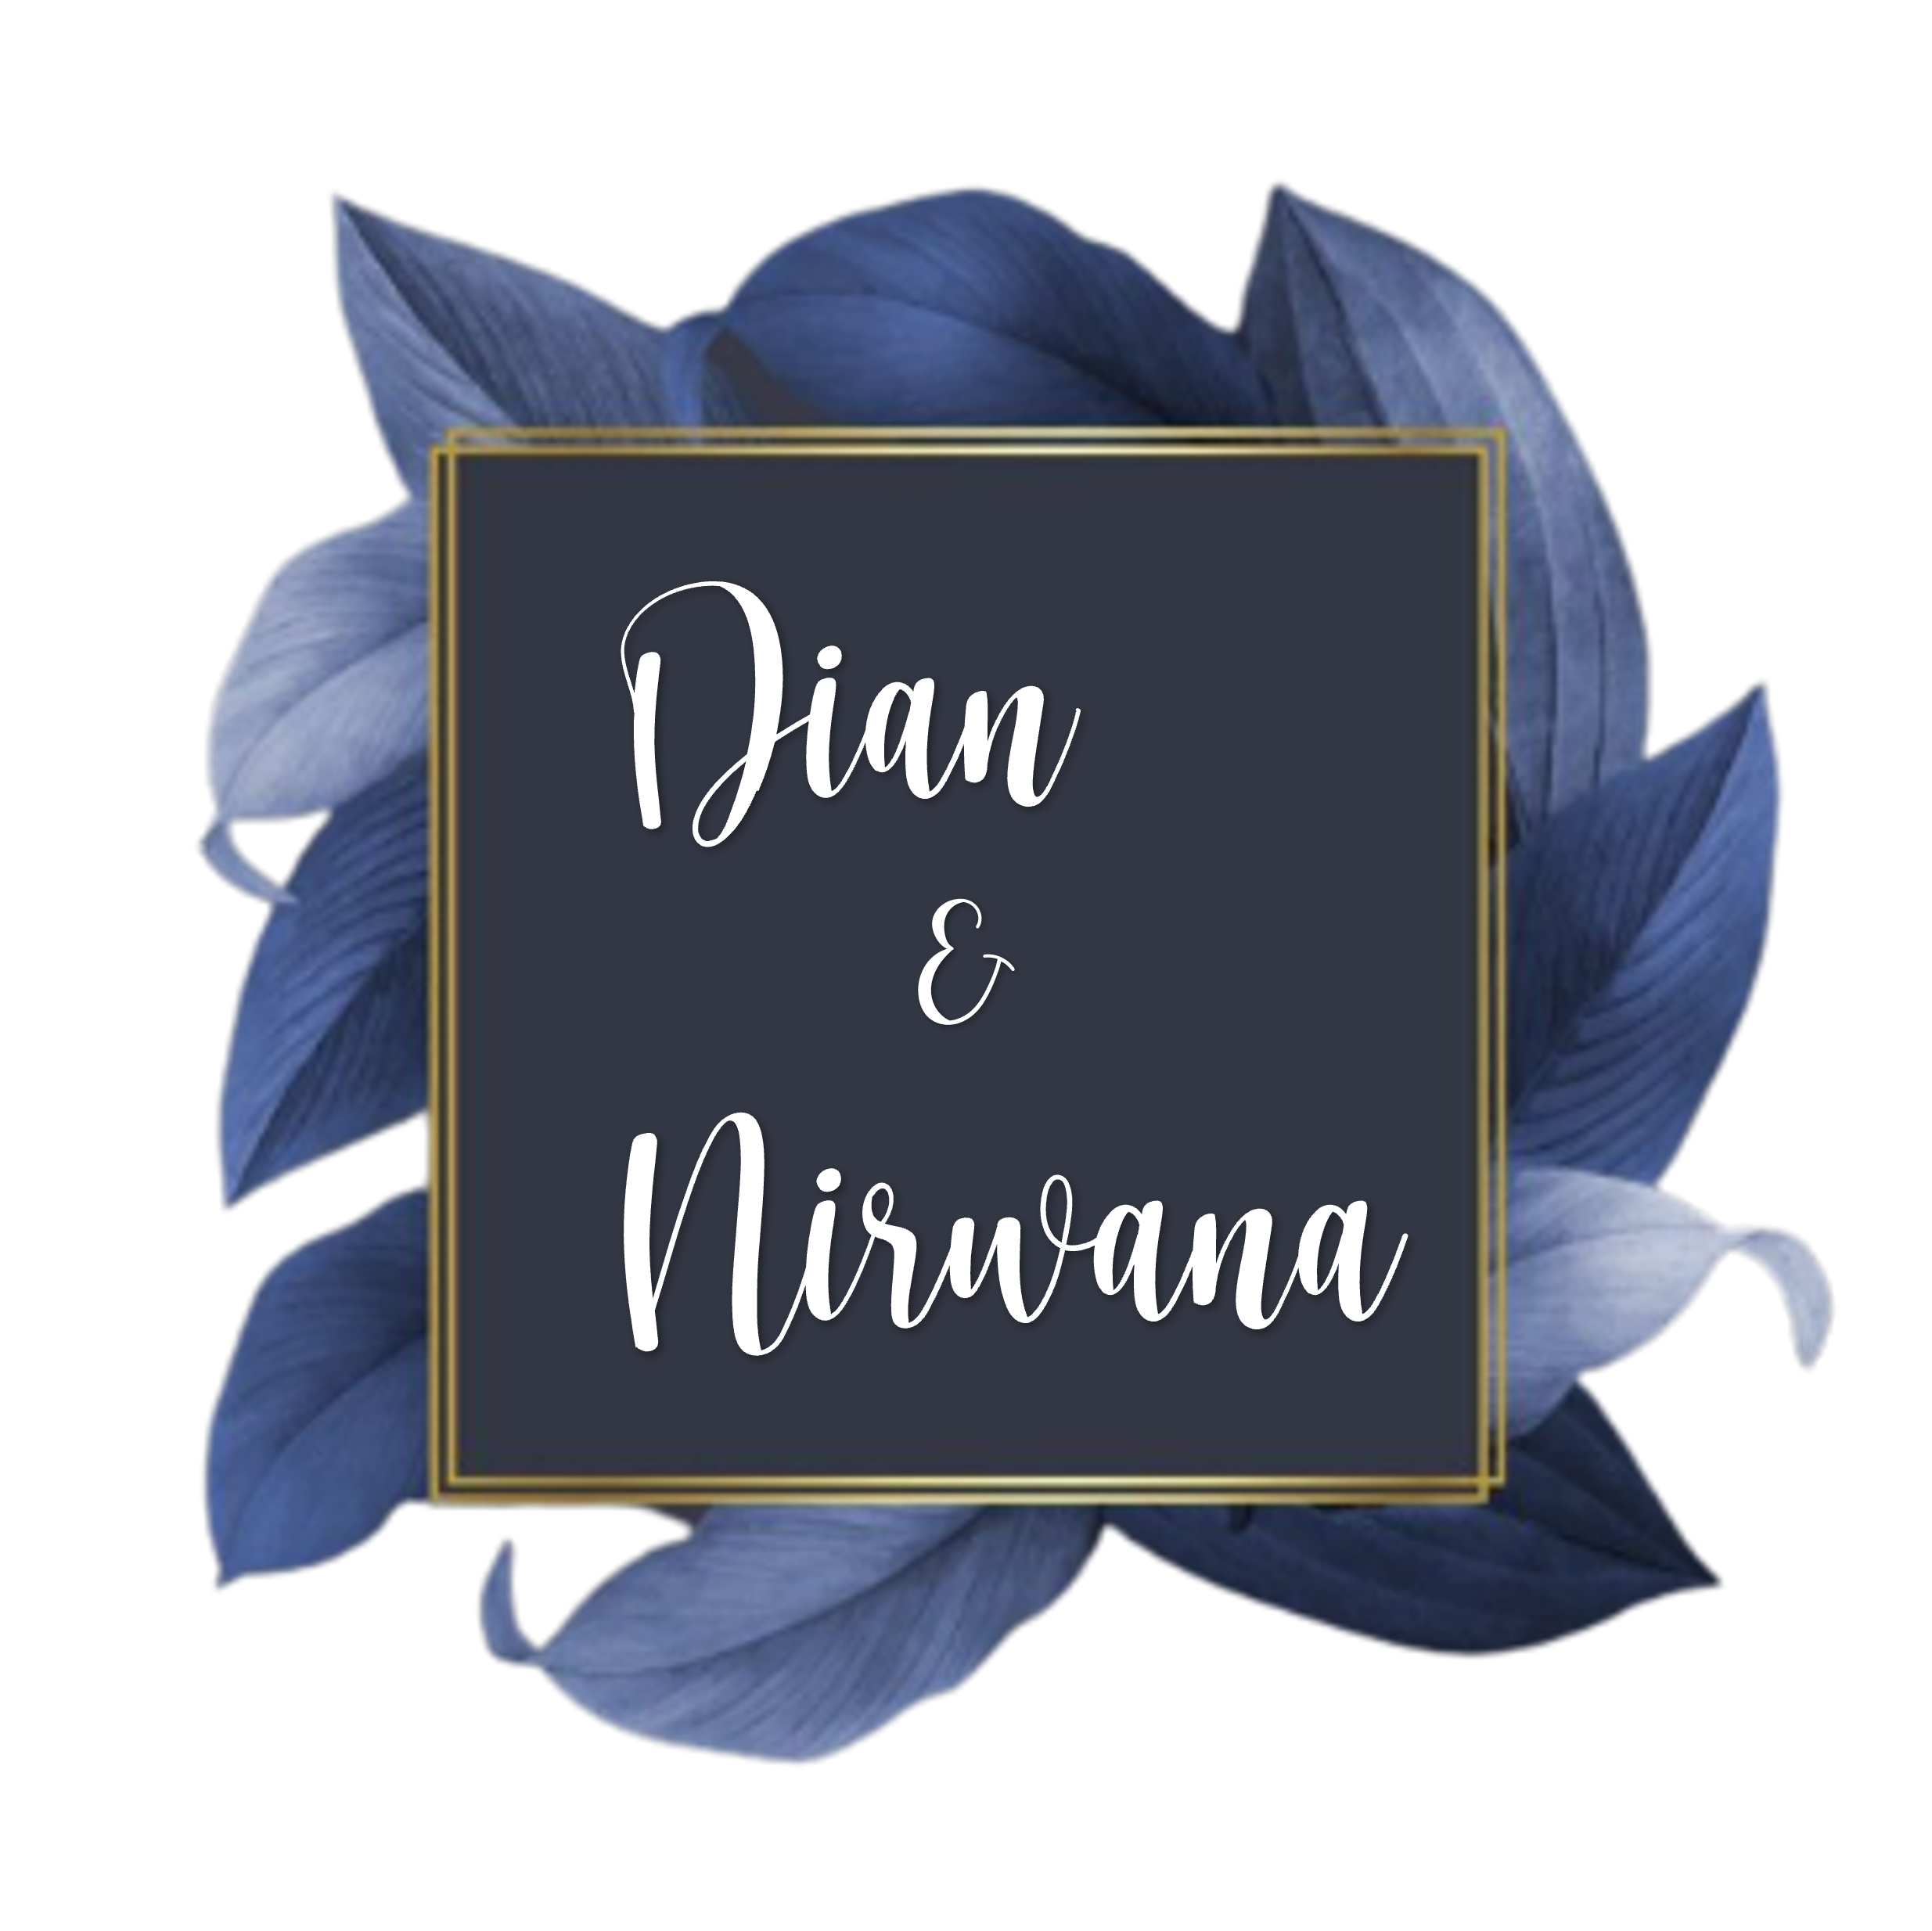 Dian & Nirwana